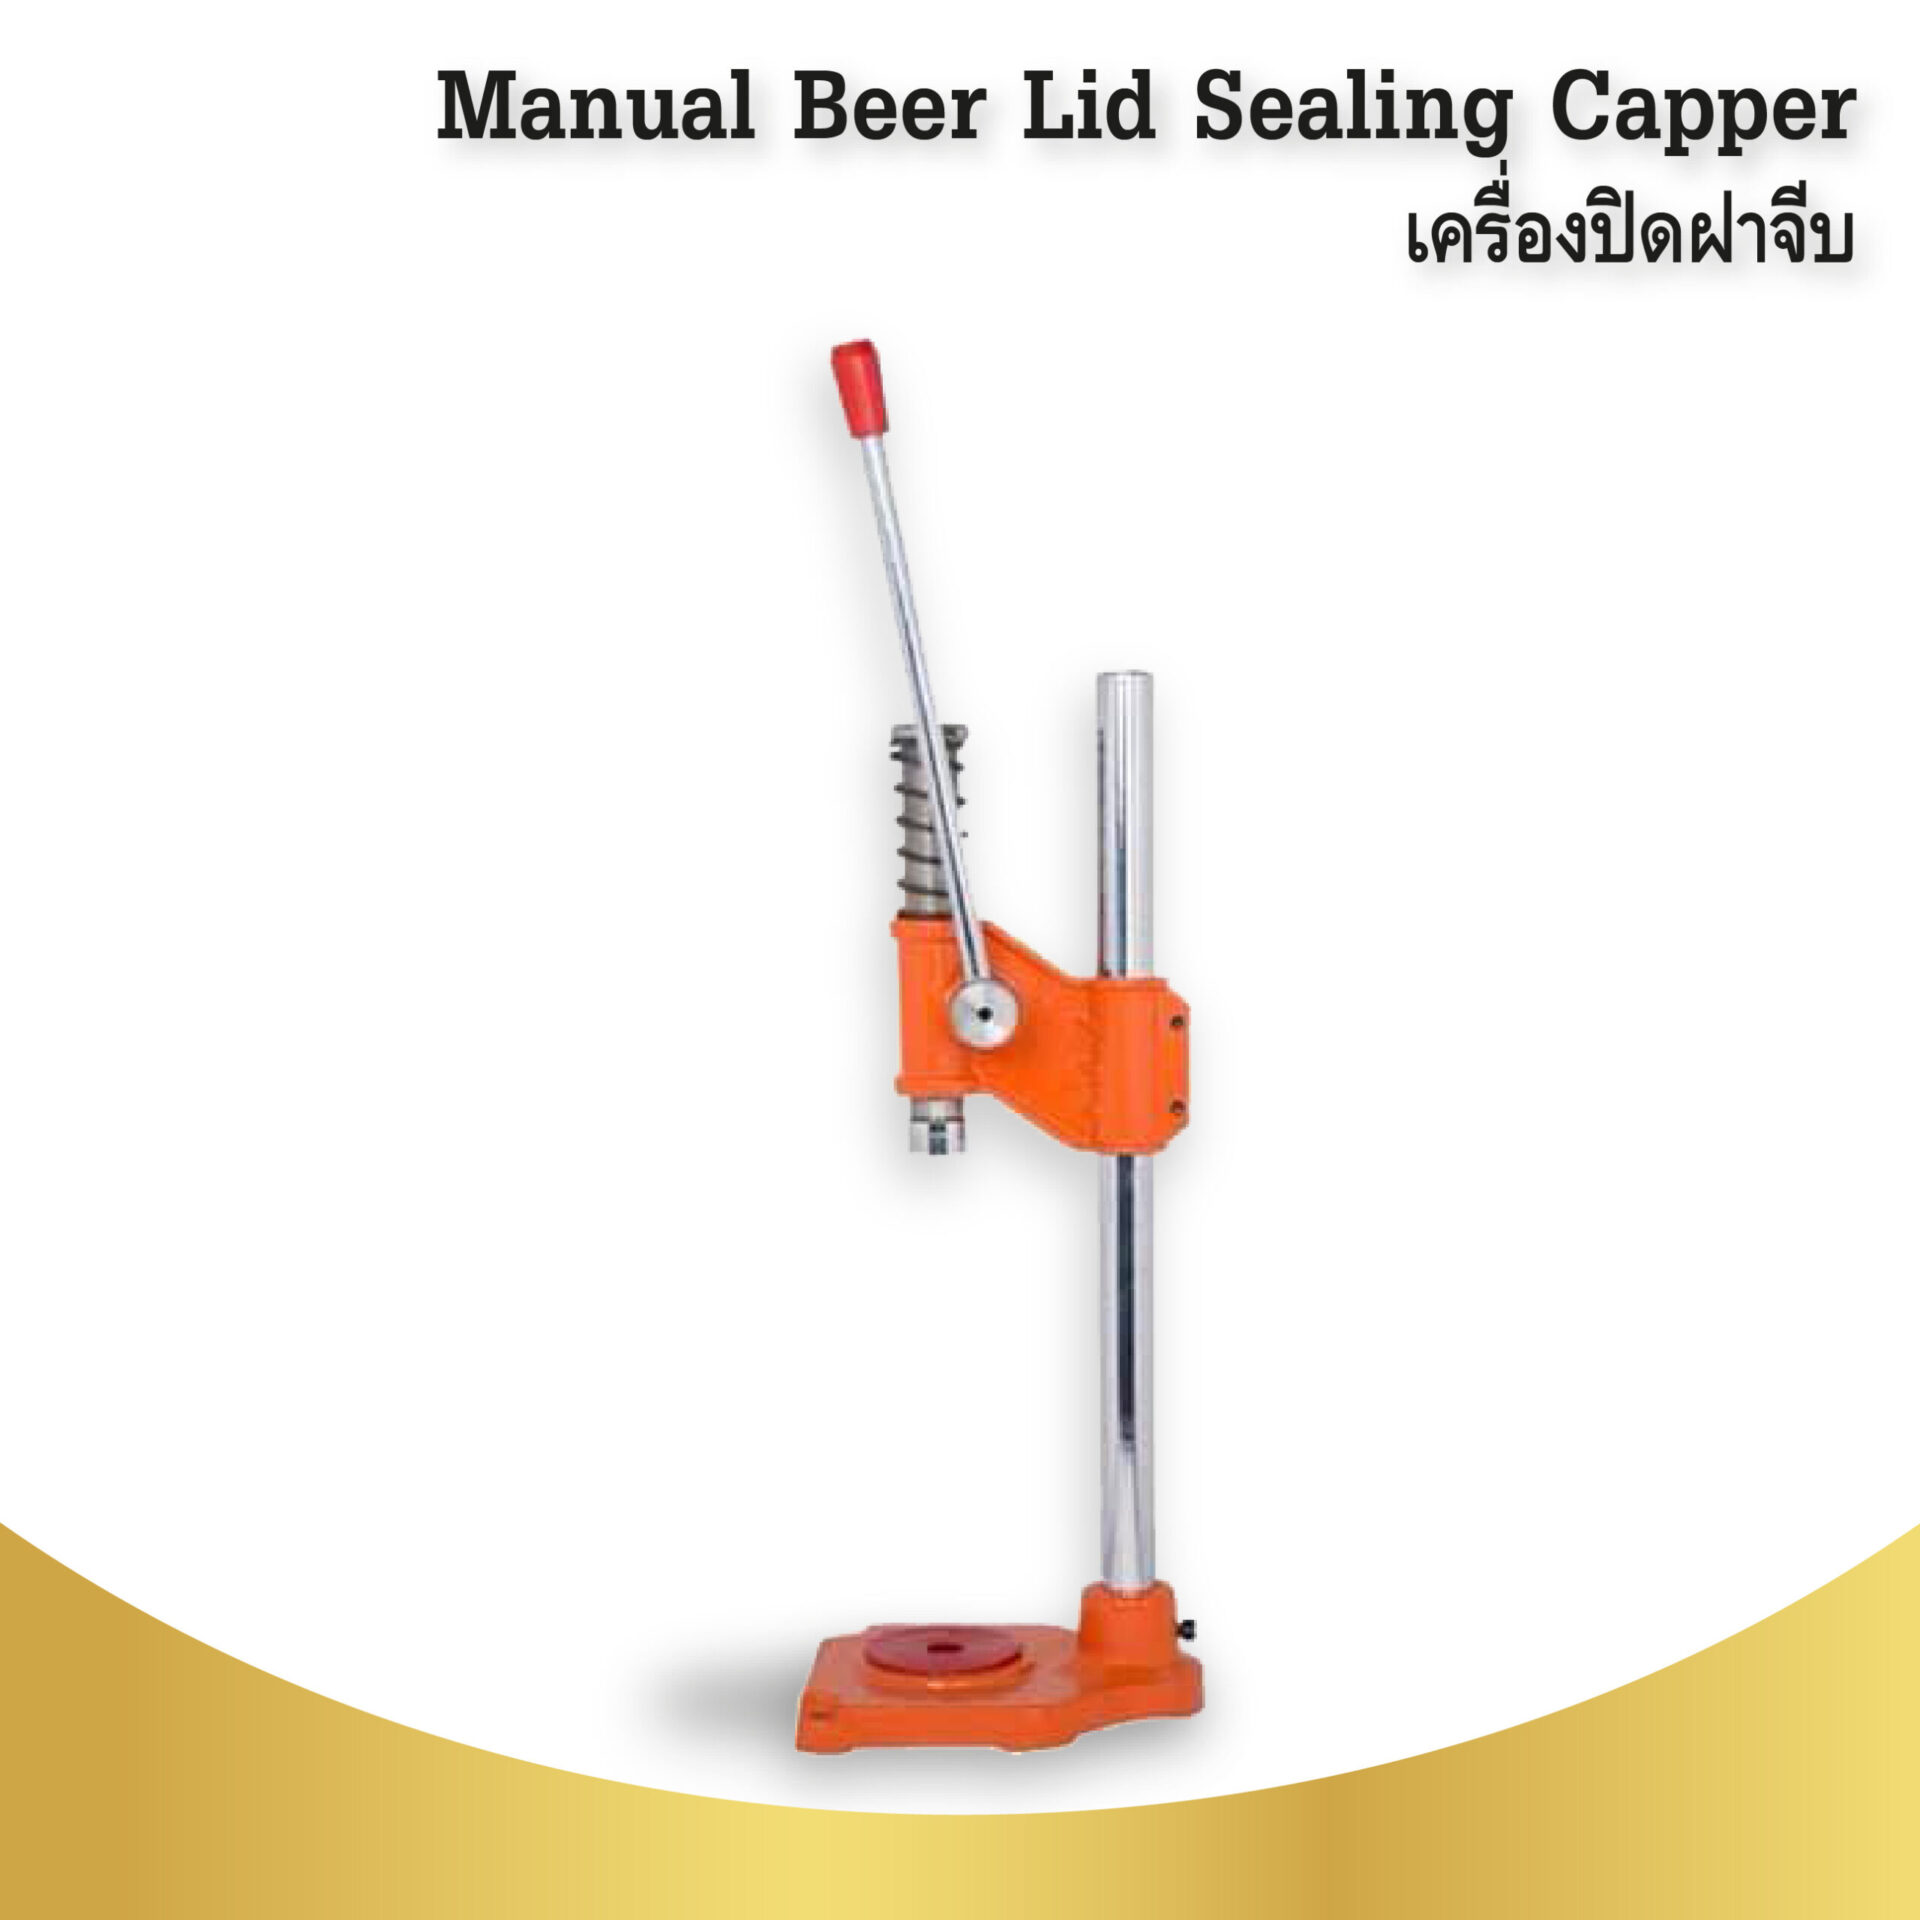 Manual Beer Lid Sealing Capper00 01